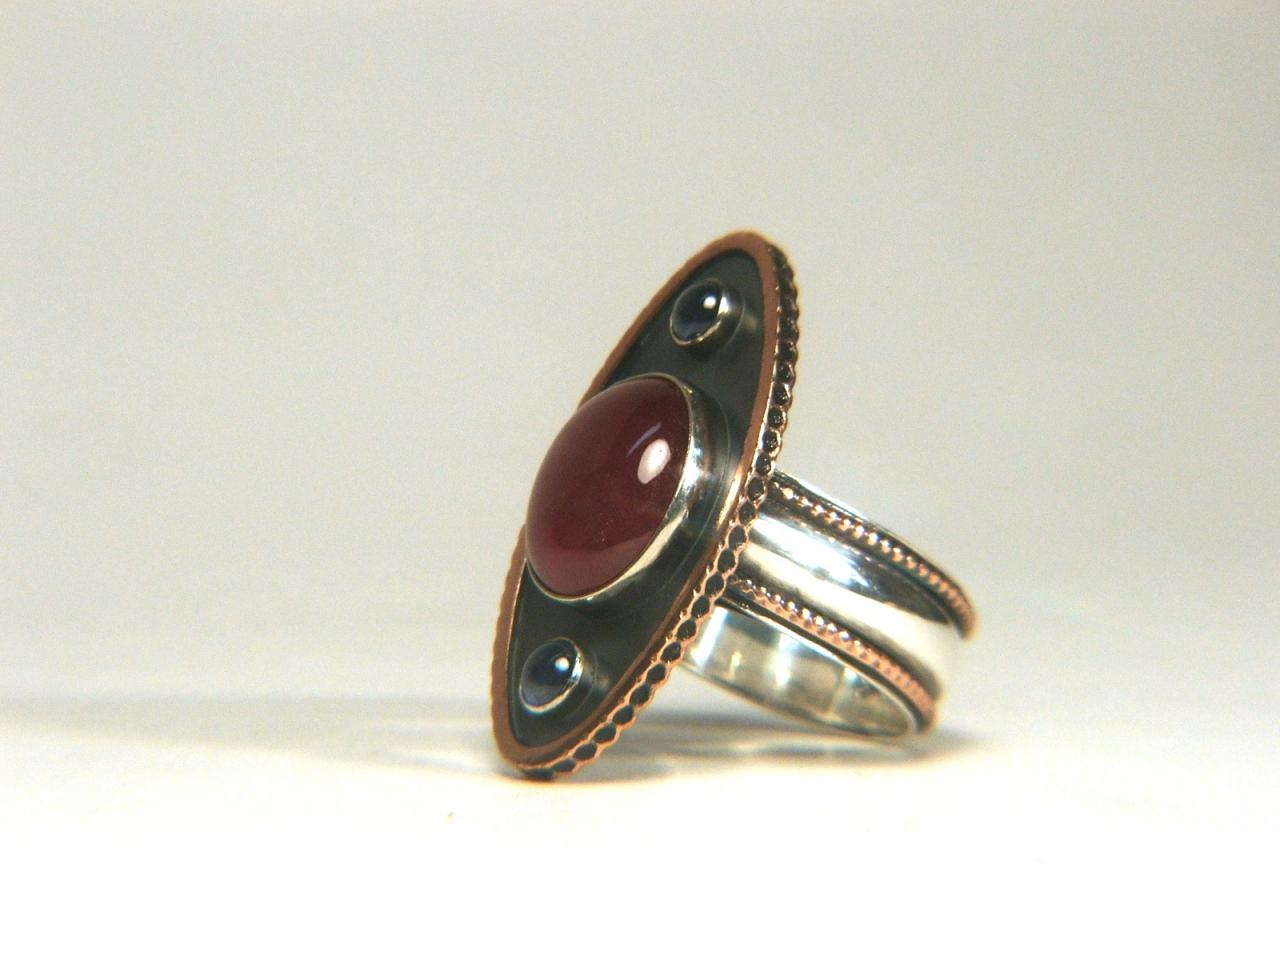 8 Carats Natural Ruby & Sapphires Ring